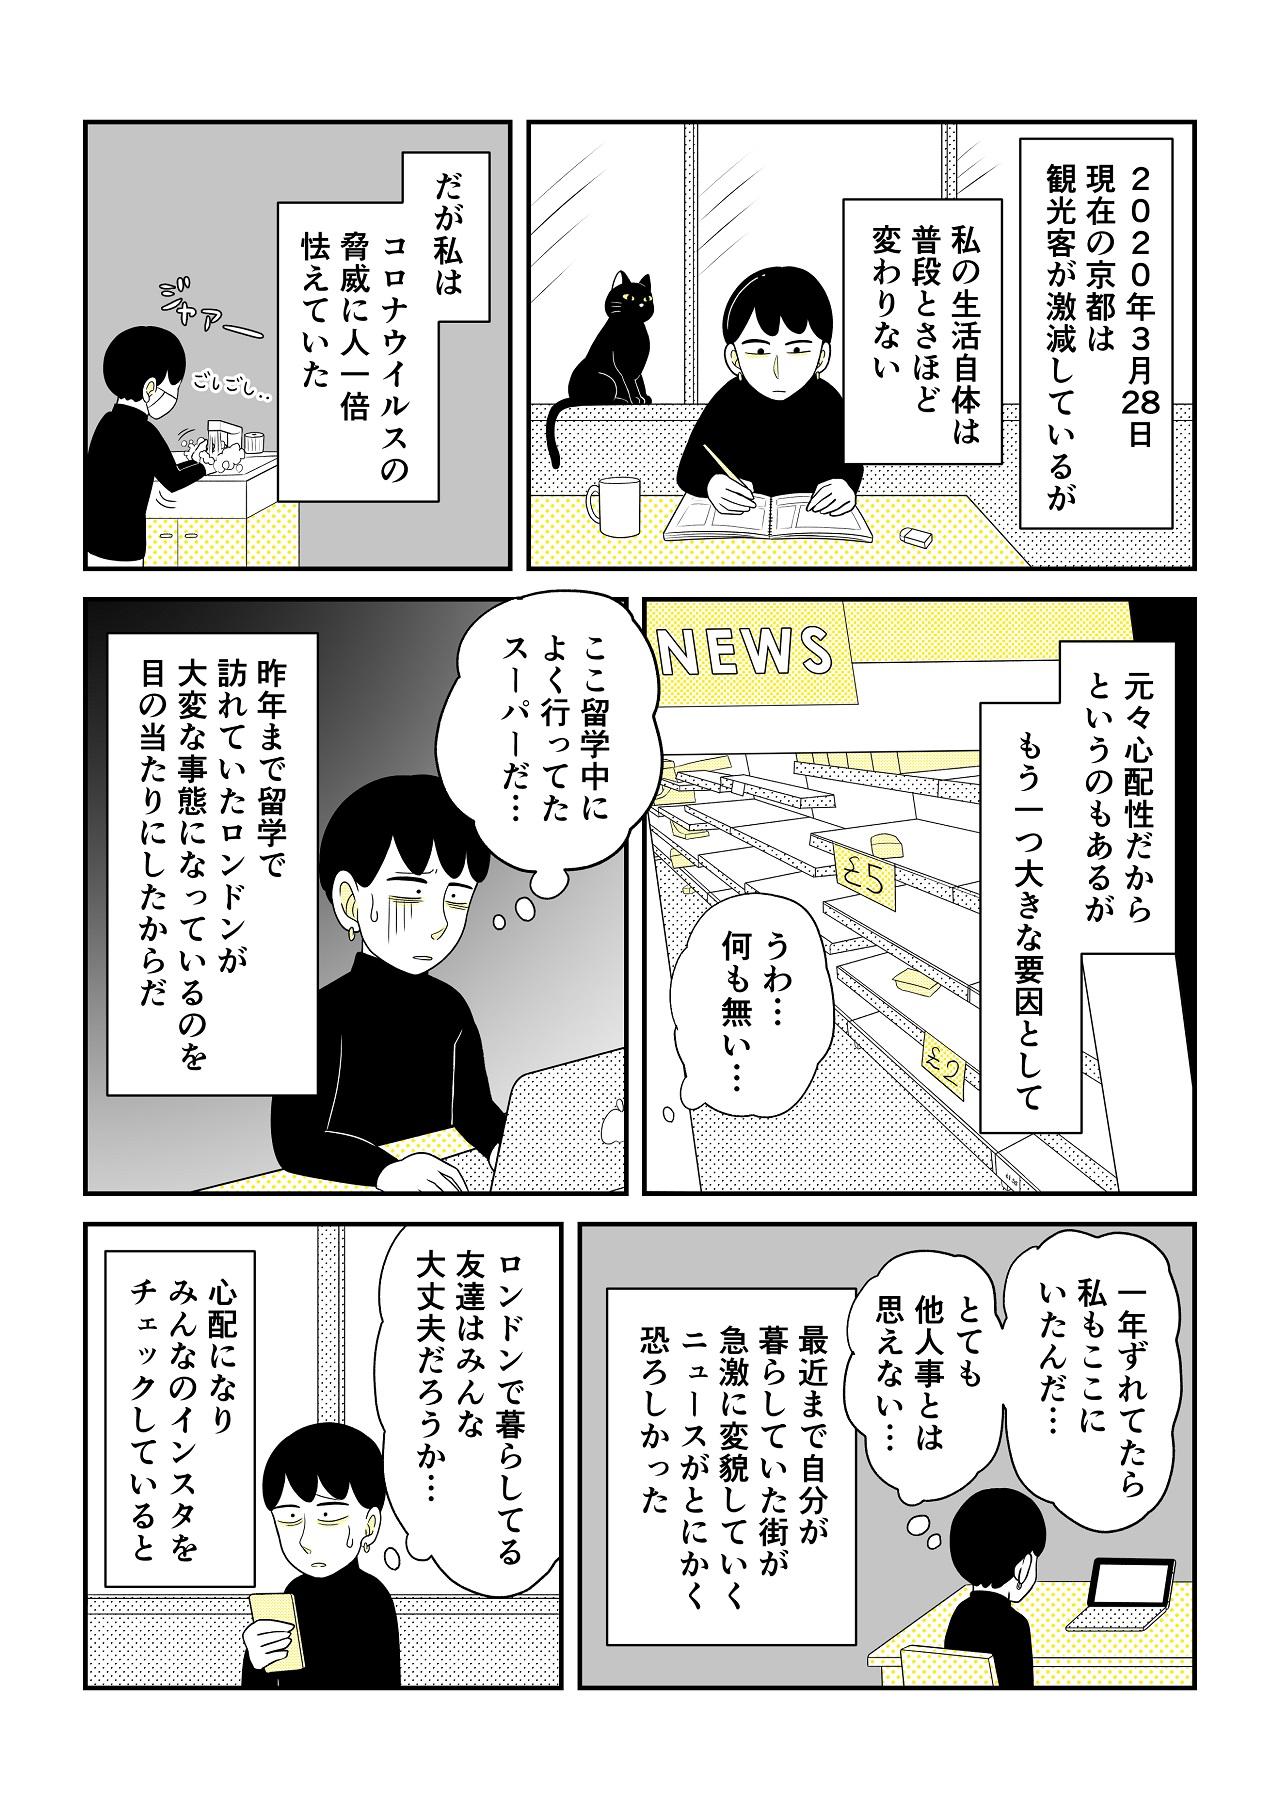 https://www.ryugaku.co.jp/column/images/sp_01_1280.jpg